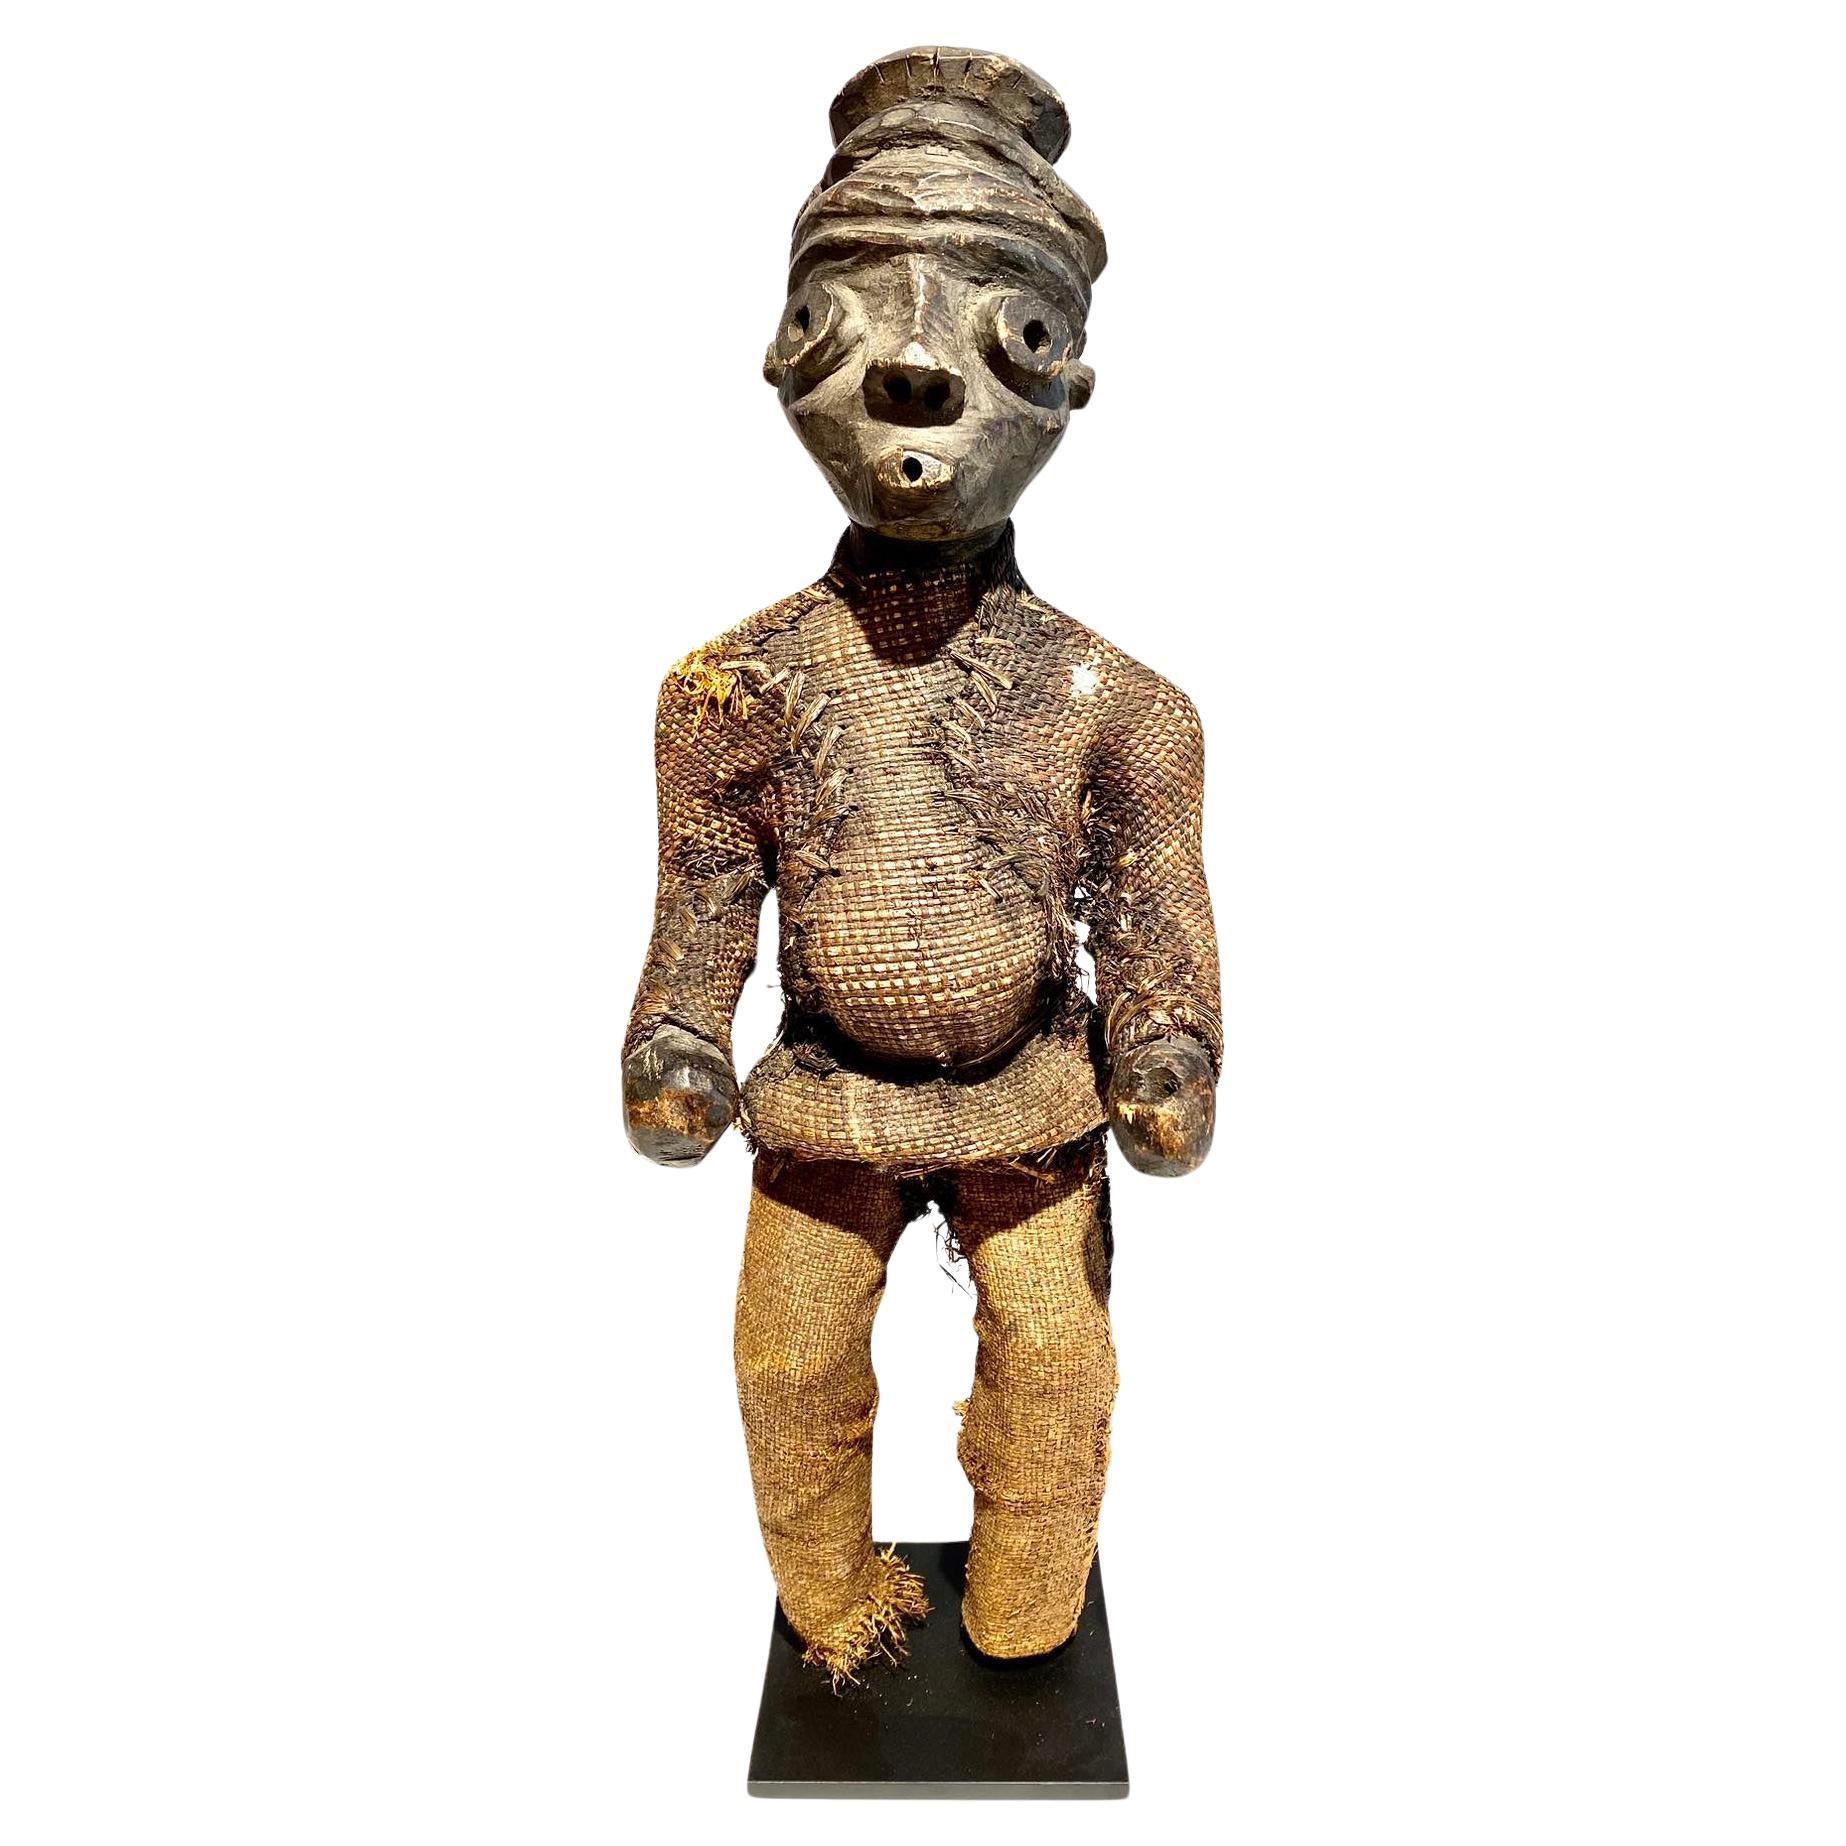 Wooden Pende Antropomorphic Statue Congo Region Kasaï -19th century African Art